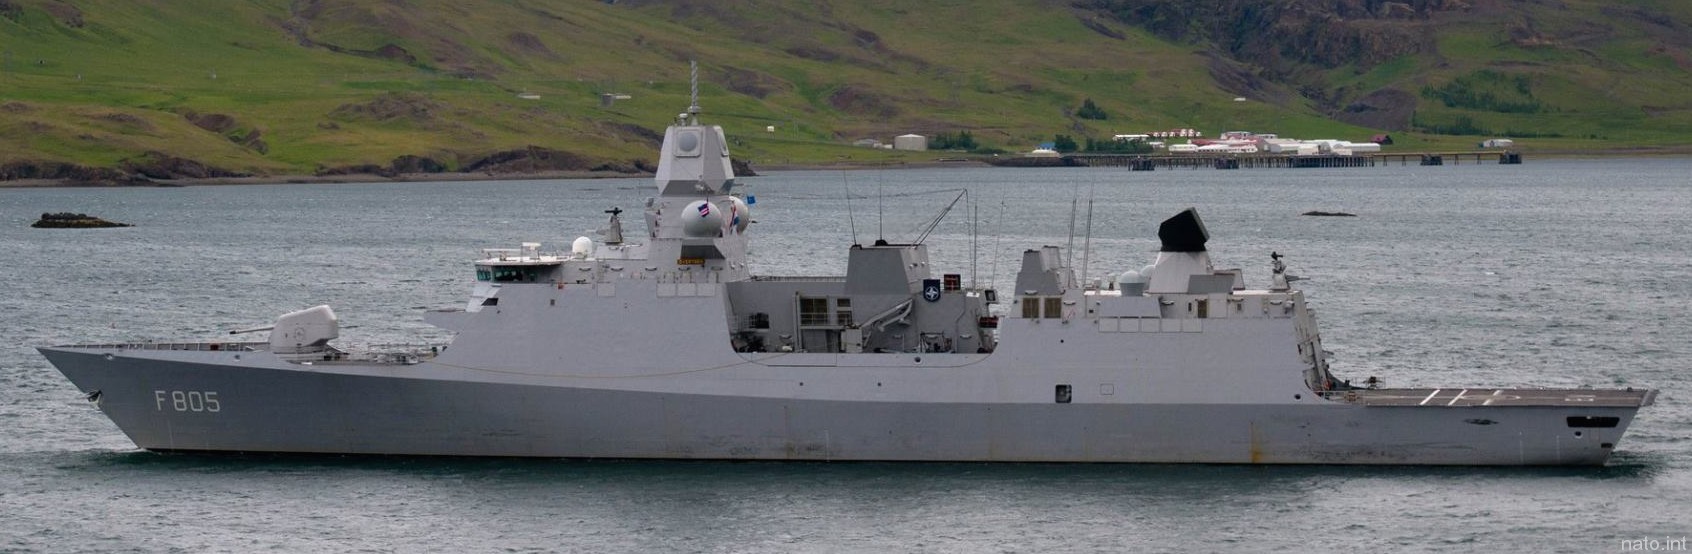 f-805 hnlms evertsen guided missile frigate ffg lcf royal netherlands navy 28